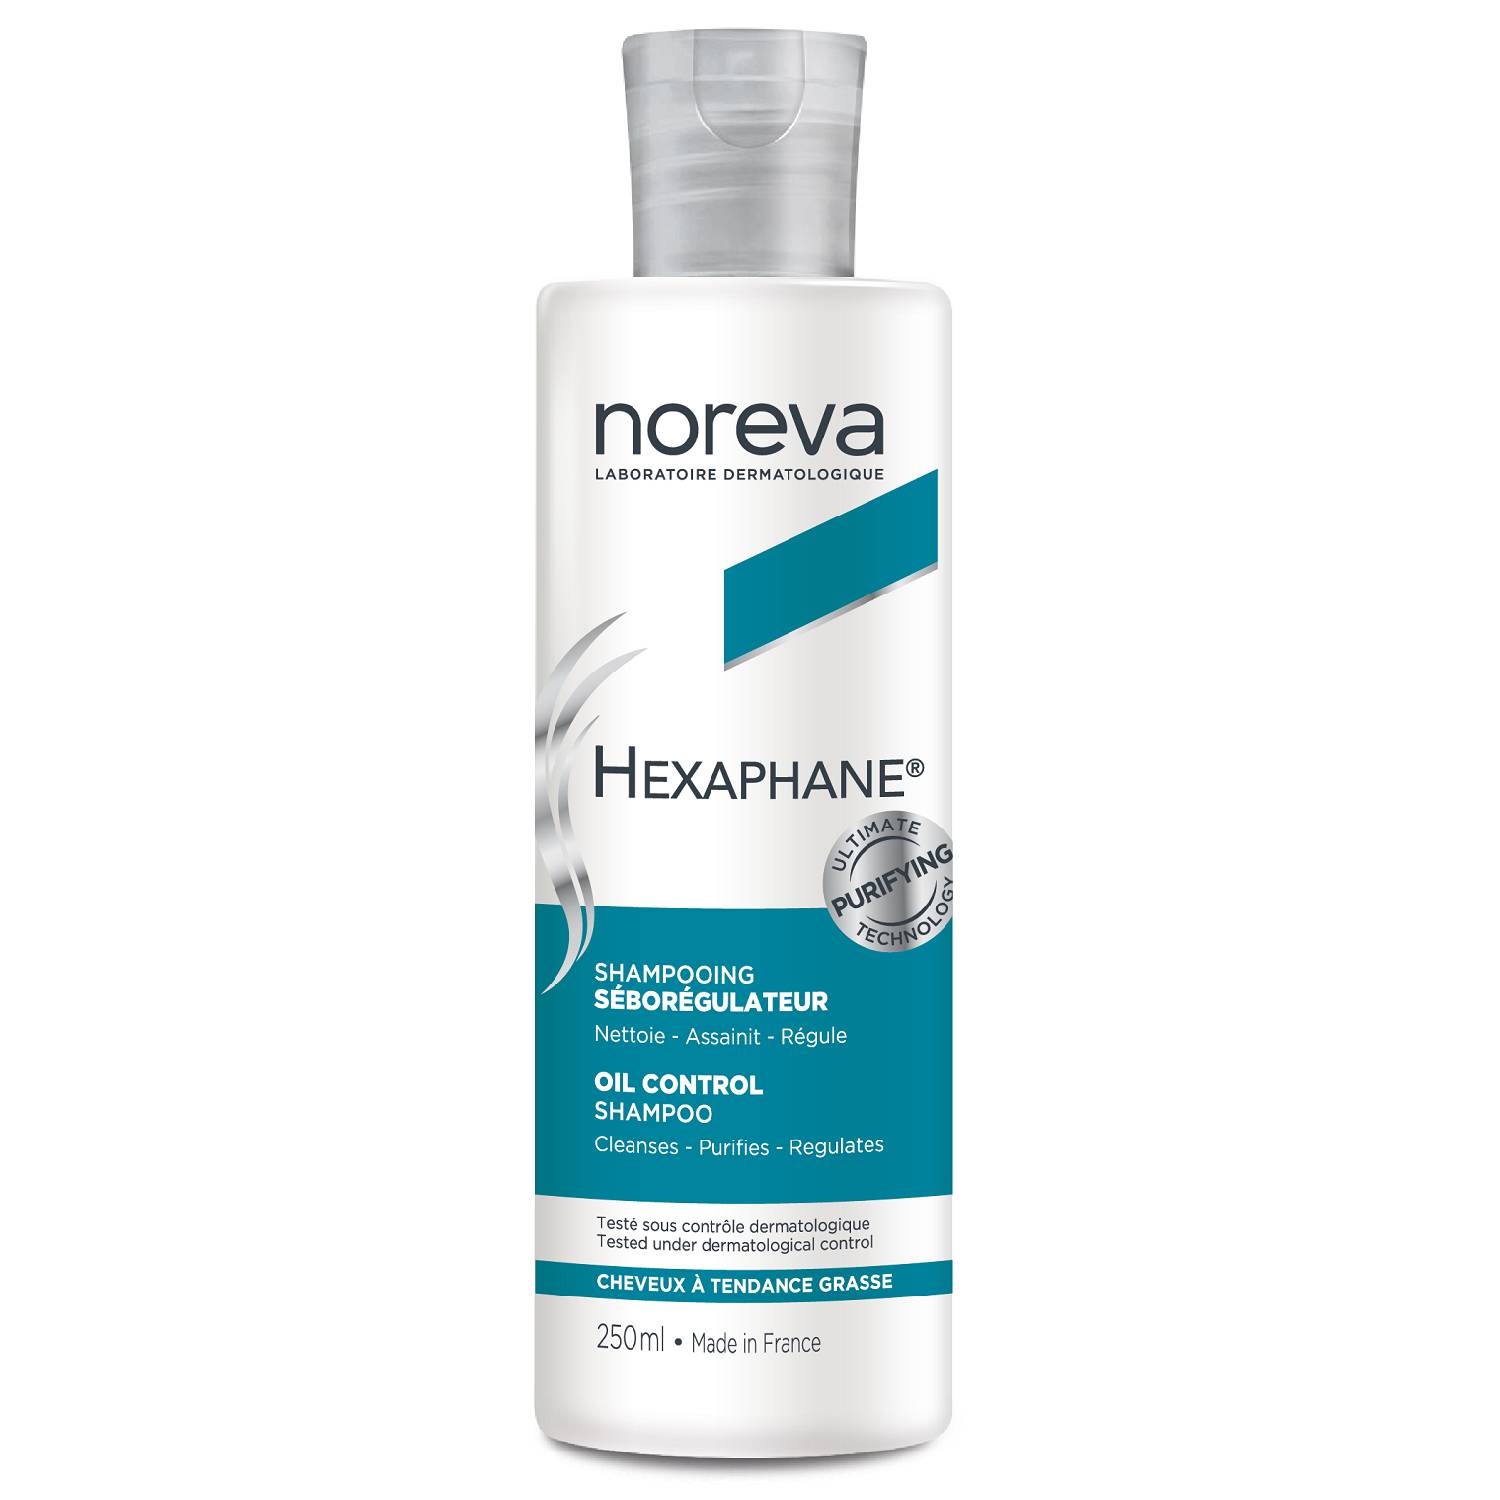 Noreva Шампунь для жирных волос Oil Control Shampoo, 250 мл (Noreva, Hexaphane)